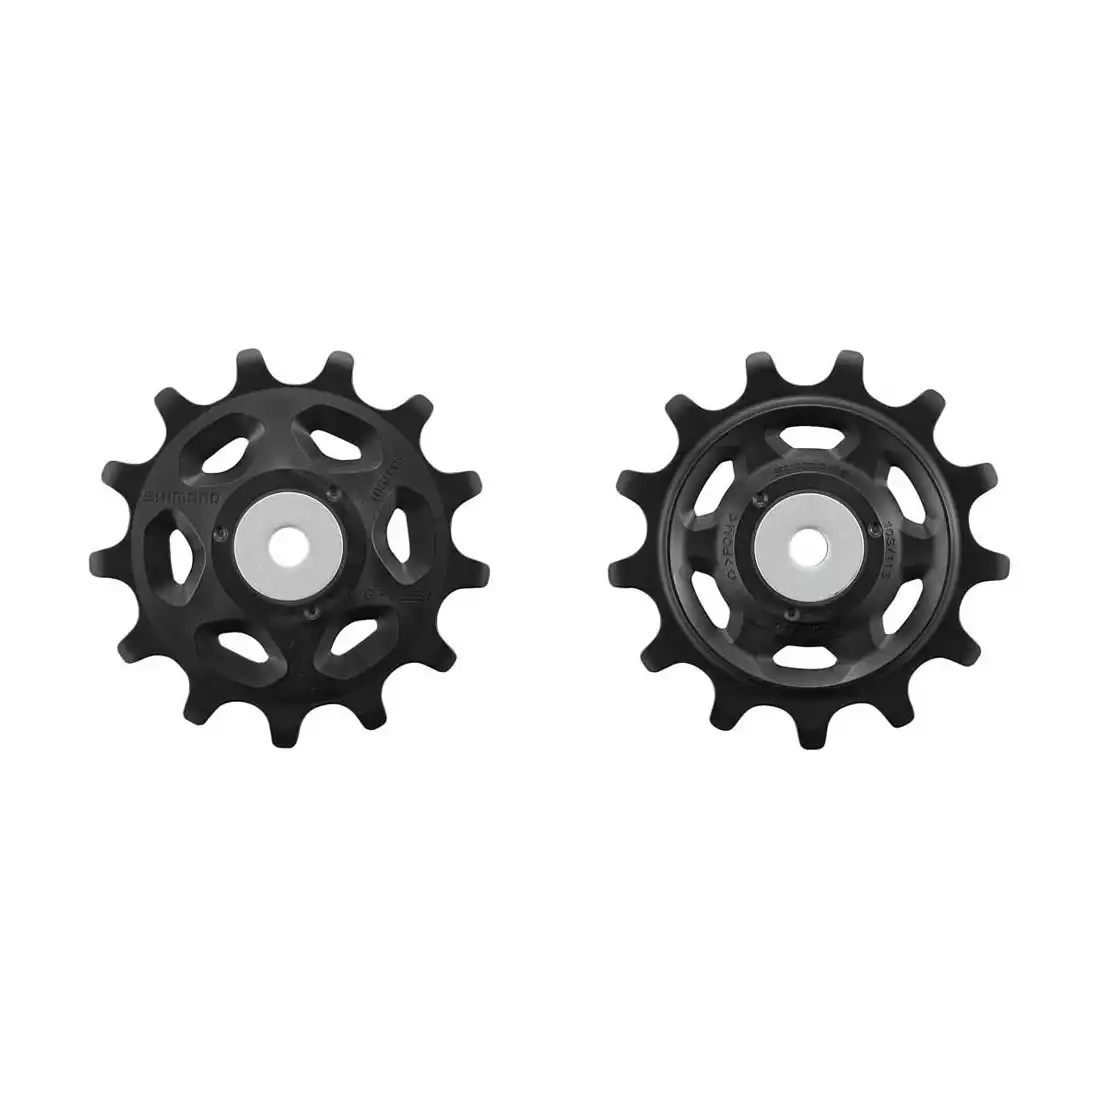 SHIMANO RD-M8130 11-speed bicycle derailleur wheels, black